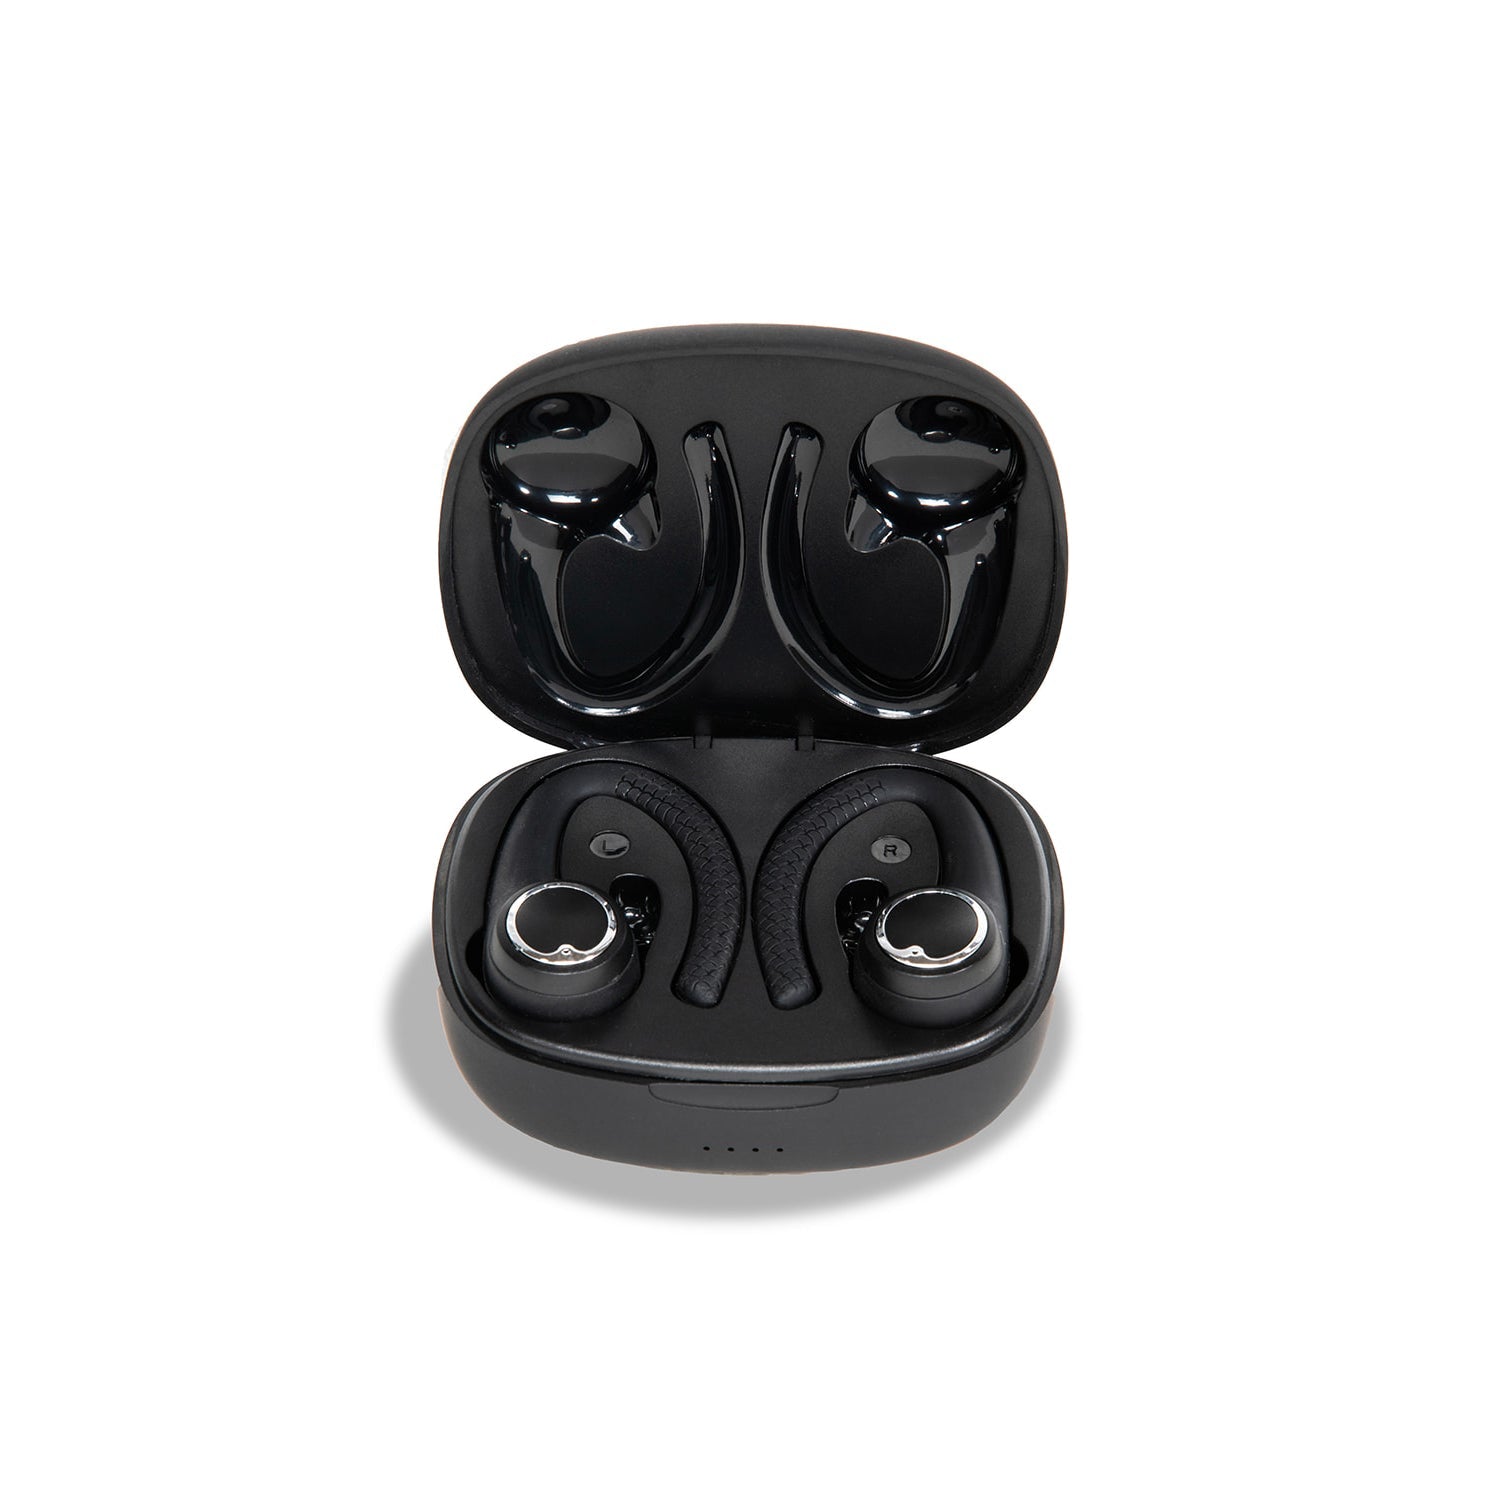 AIR Active 2.0 Matte Black Sport Earbuds (In Ear Wireless Headphones)